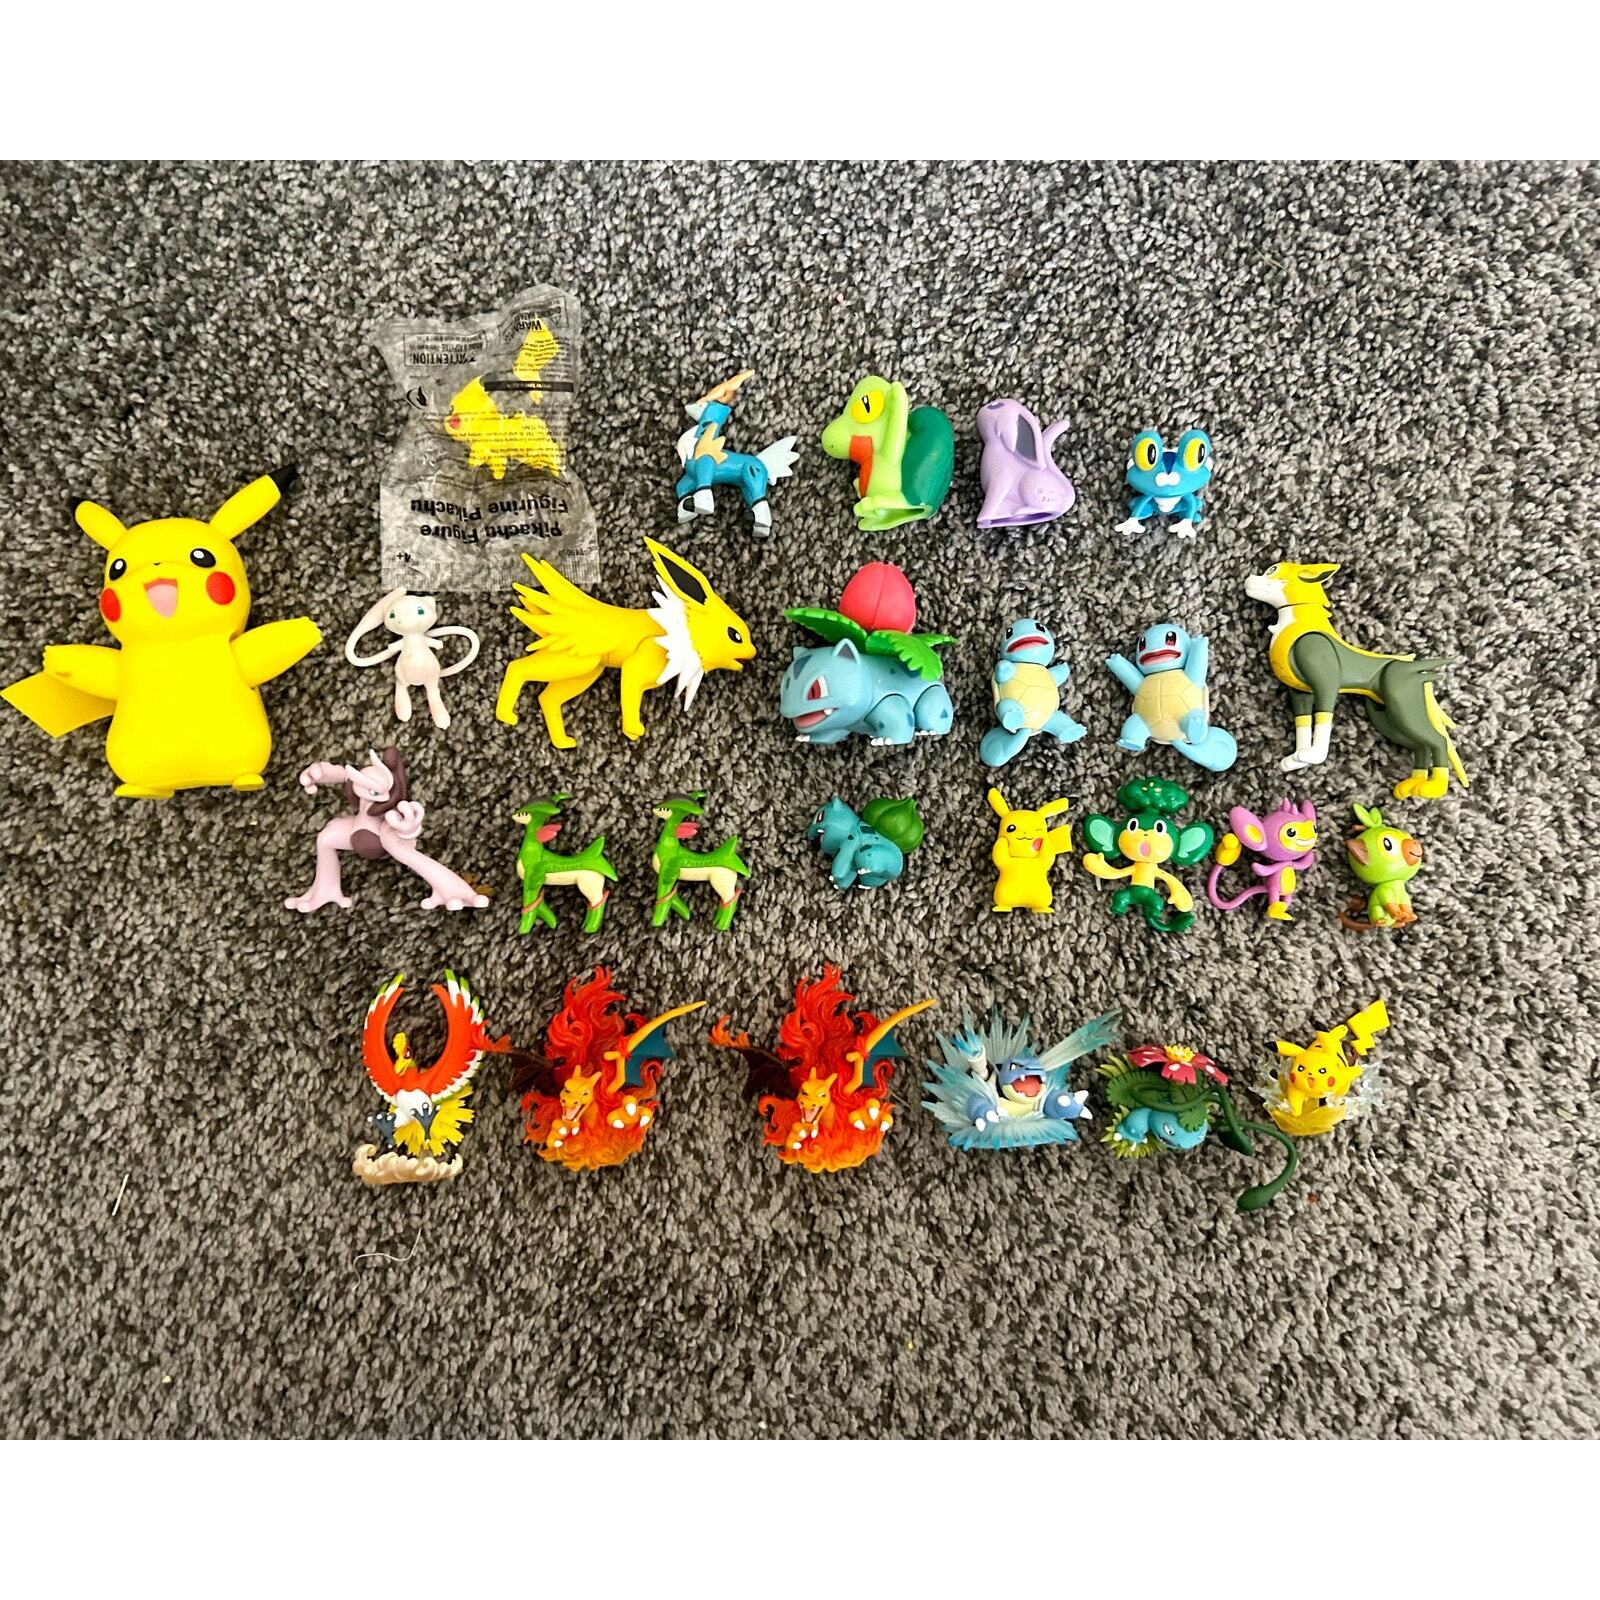 Pokemon Action Figure & Figurine Toys Mixed Lot x25